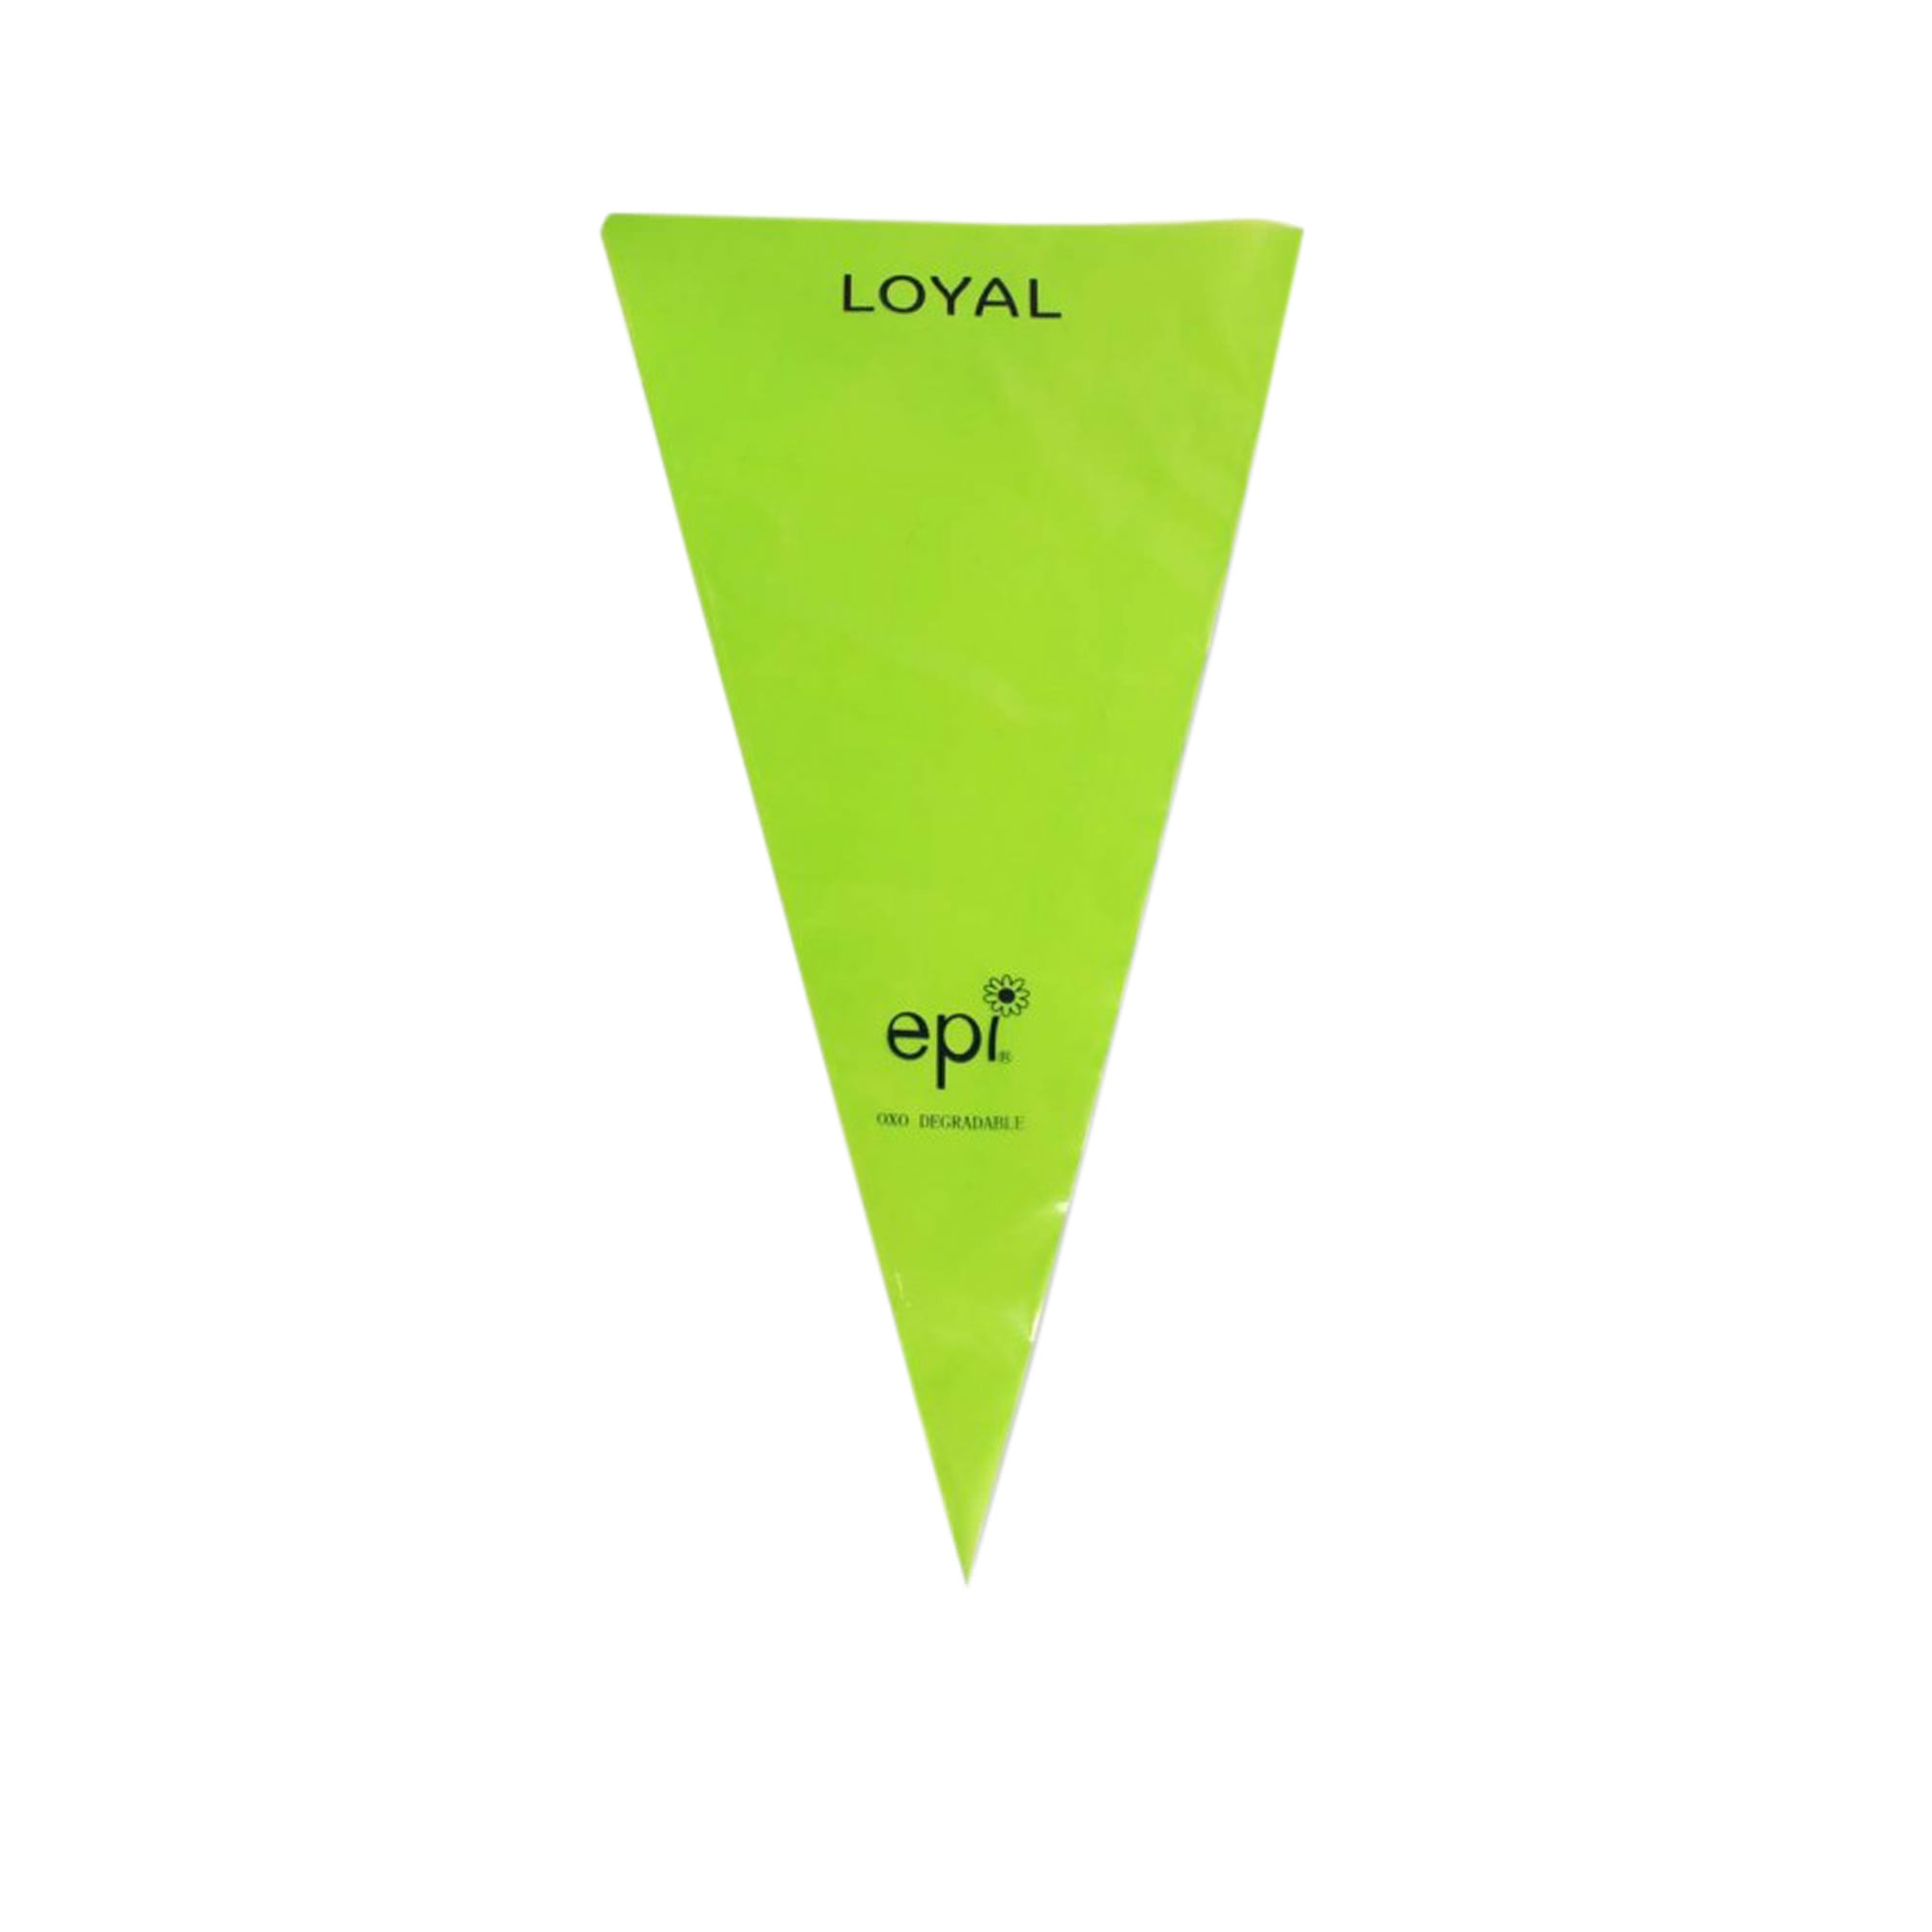 Loyal Biodegradable Disposable Piping Bag 46cm Green Image 3